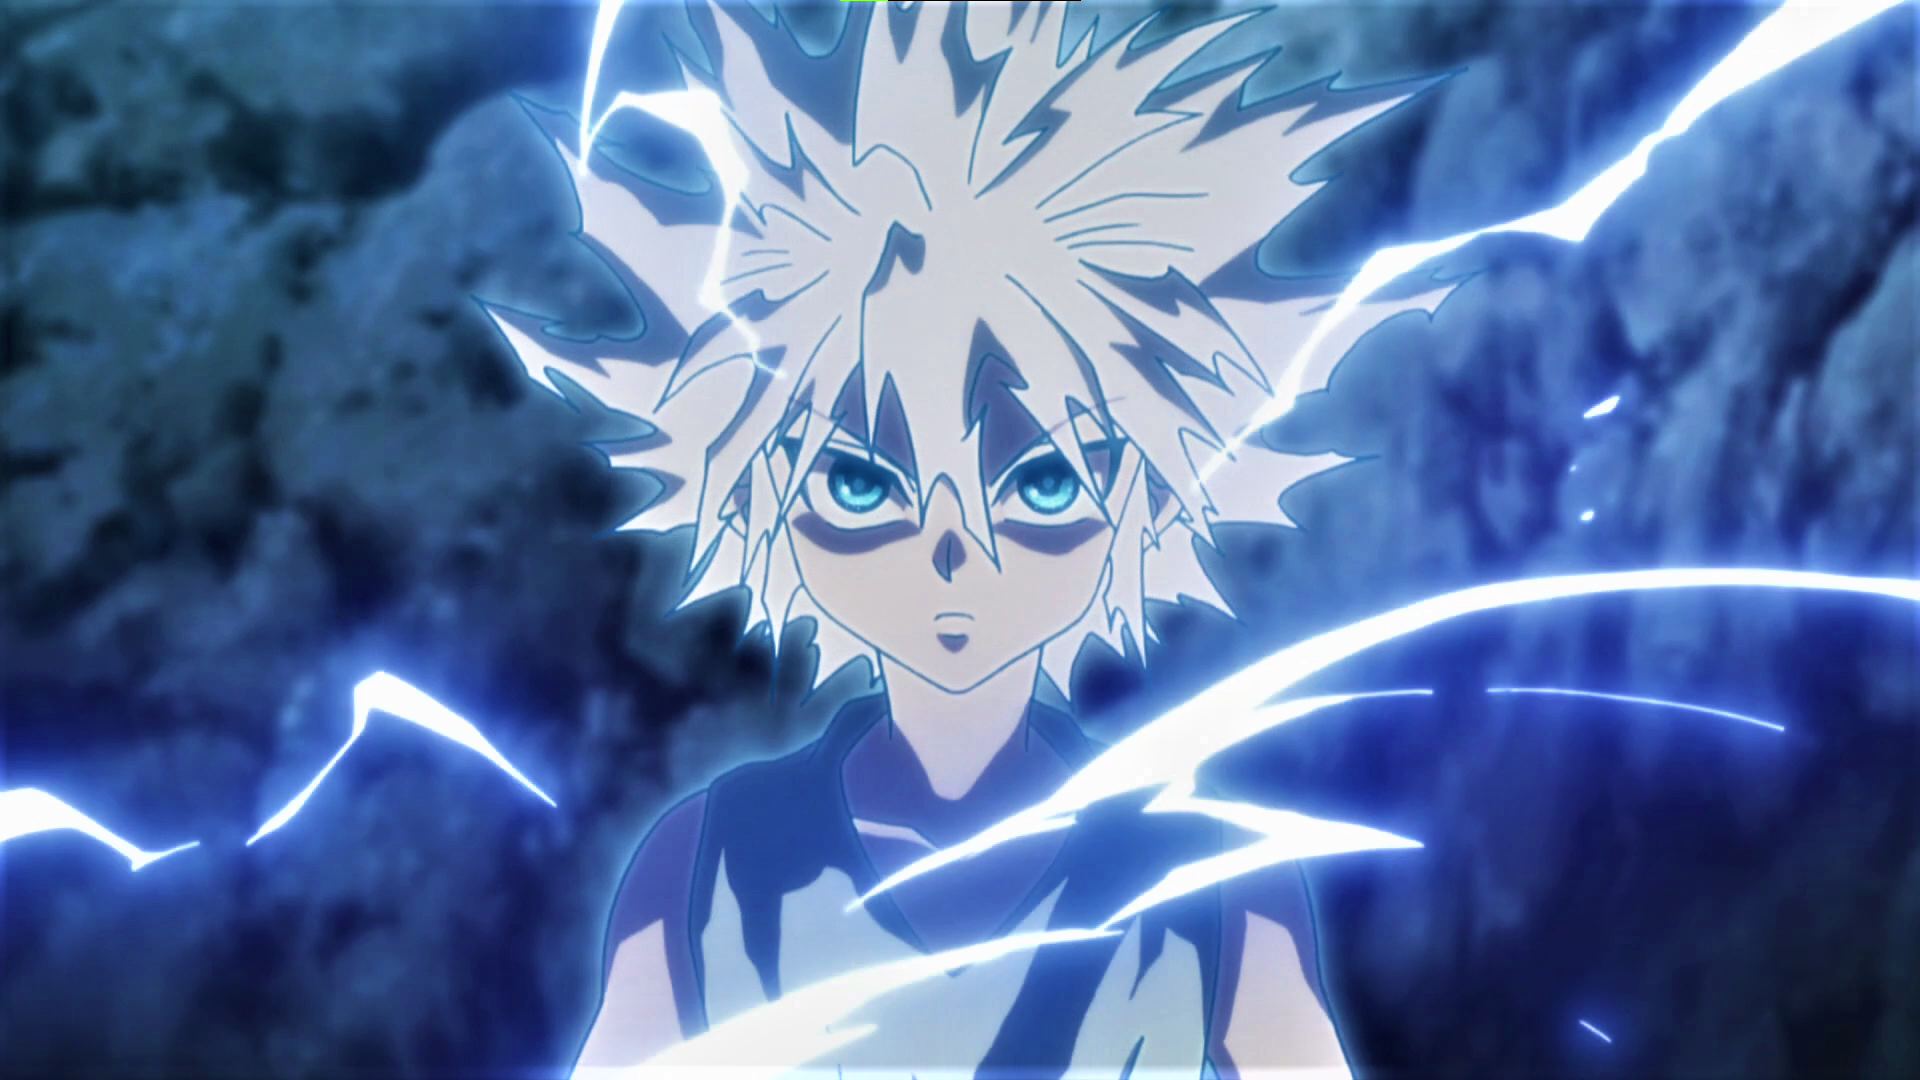 Anime 1920x1080 Hunter x Hunter Killua Zoldyck white hair Spiky Hair lightning angry blue eyes anime Anime screenshot anime boys